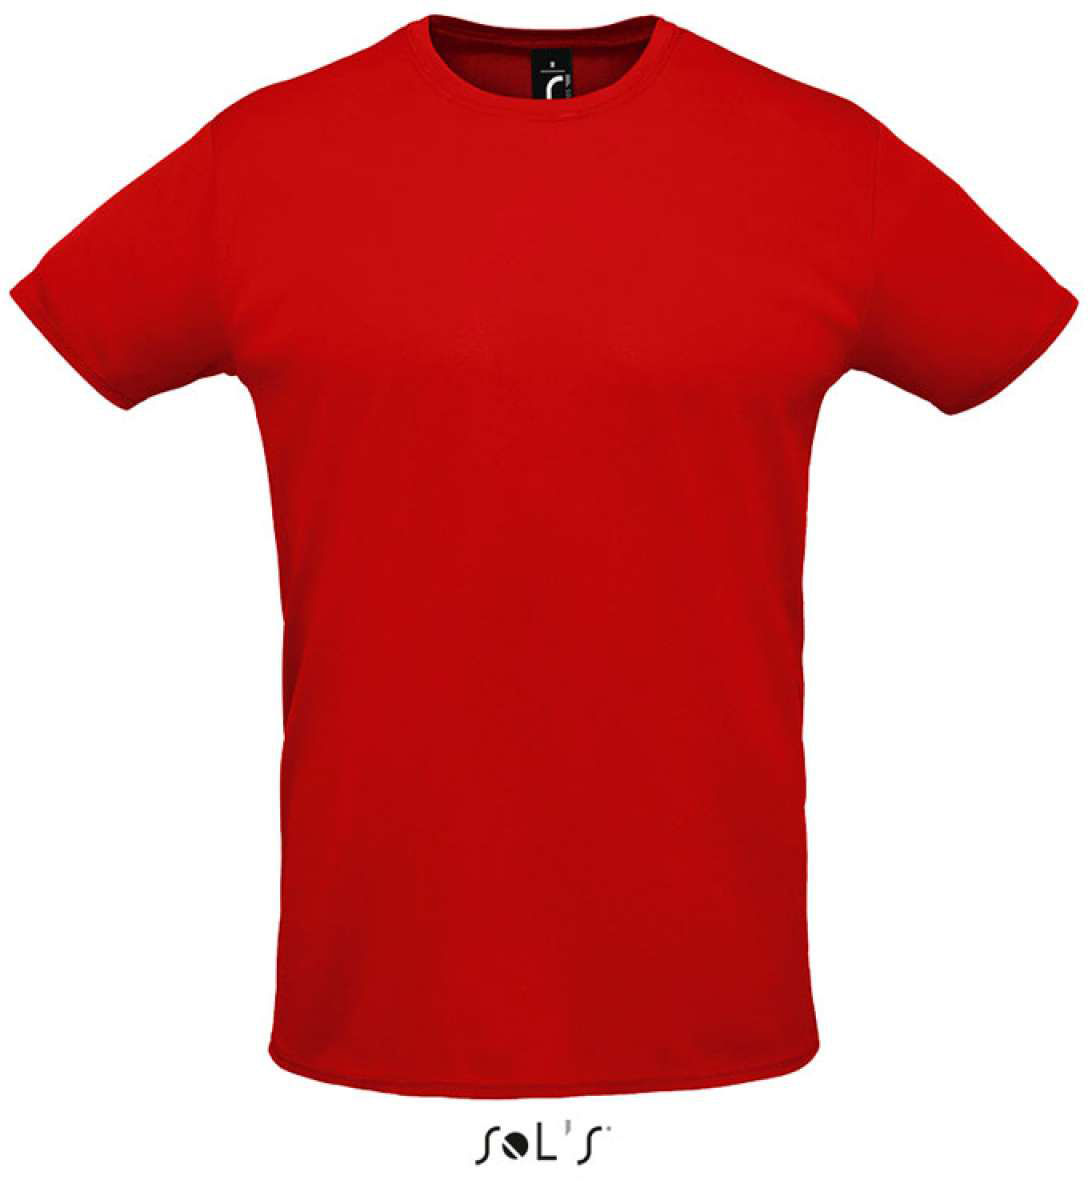 Sol's Sprint - Unisex Sport T-shirt - Sol's Sprint - Unisex Sport T-shirt - Red